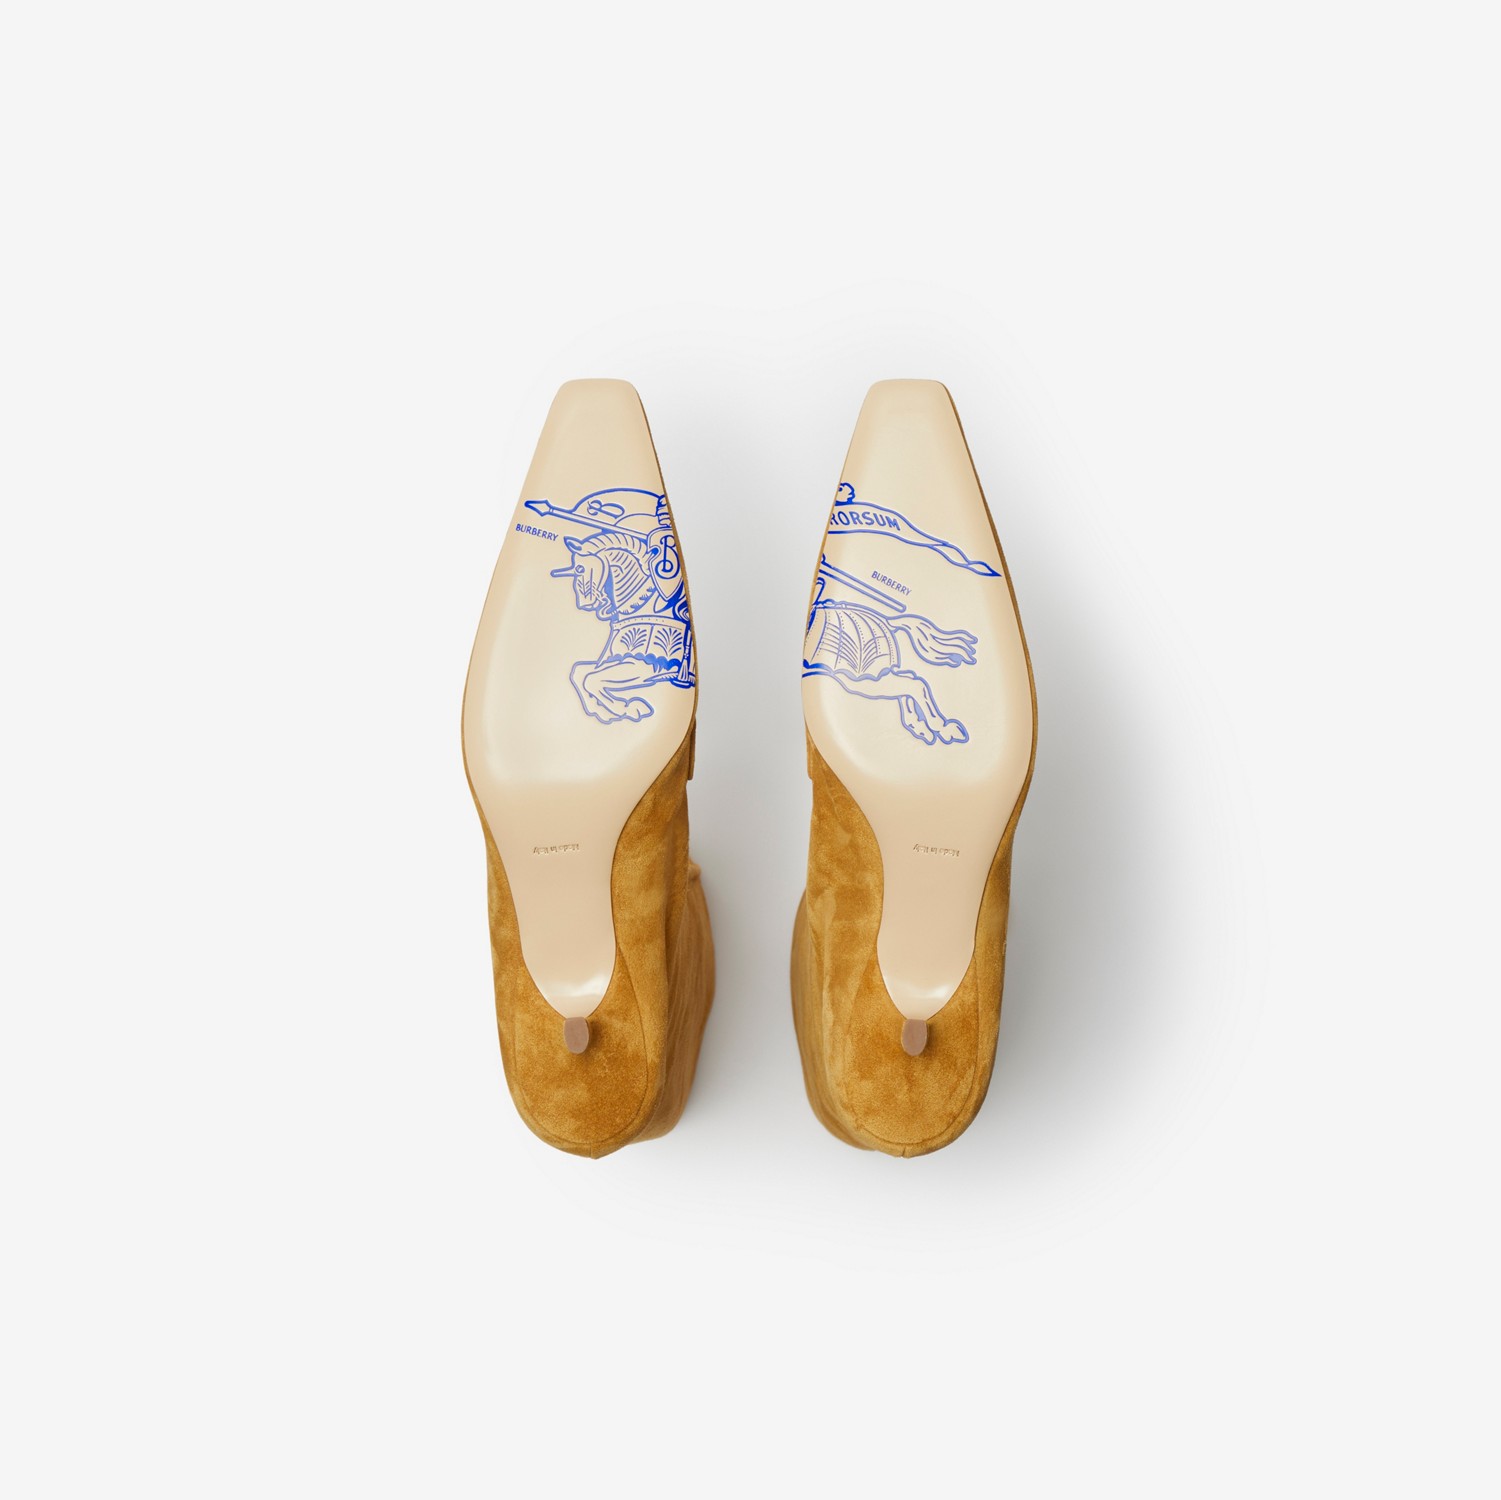 Suede Storm Boots (Manilla) - Femme | Site officiel Burberry®